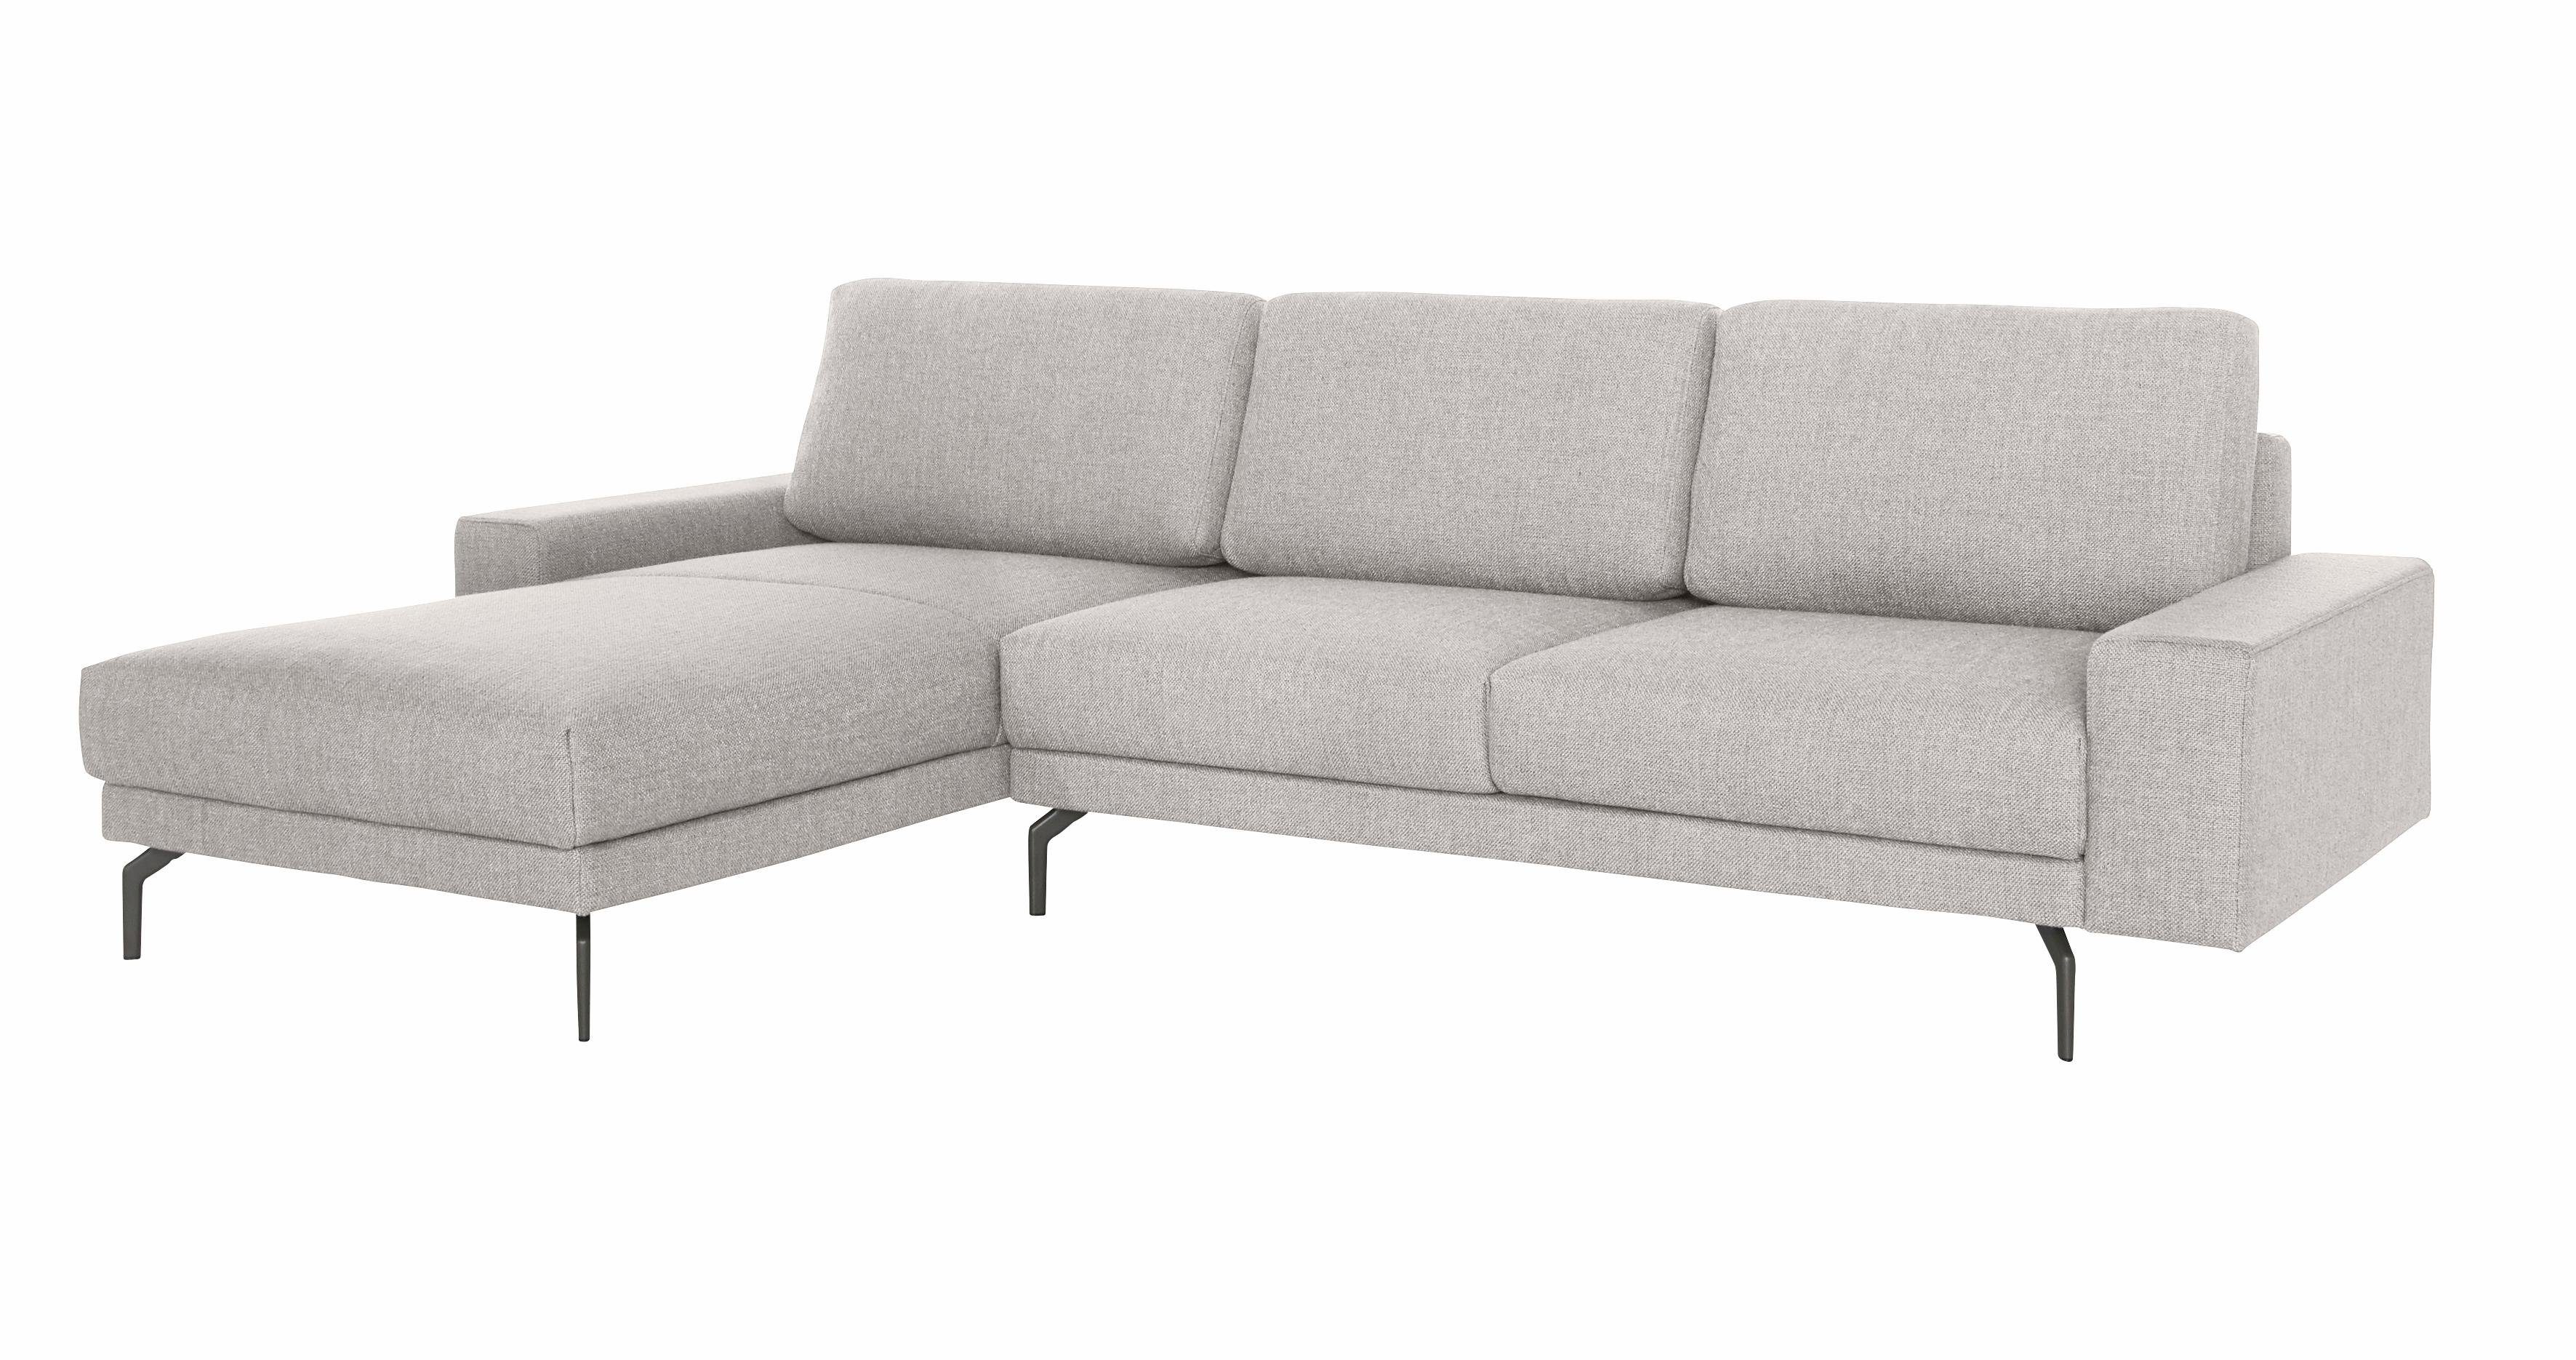 hülsta sofa breit niedrig, Breite cm 294 Ecksofa und in Armlehne hs.450, Alugussfüße umbragrau